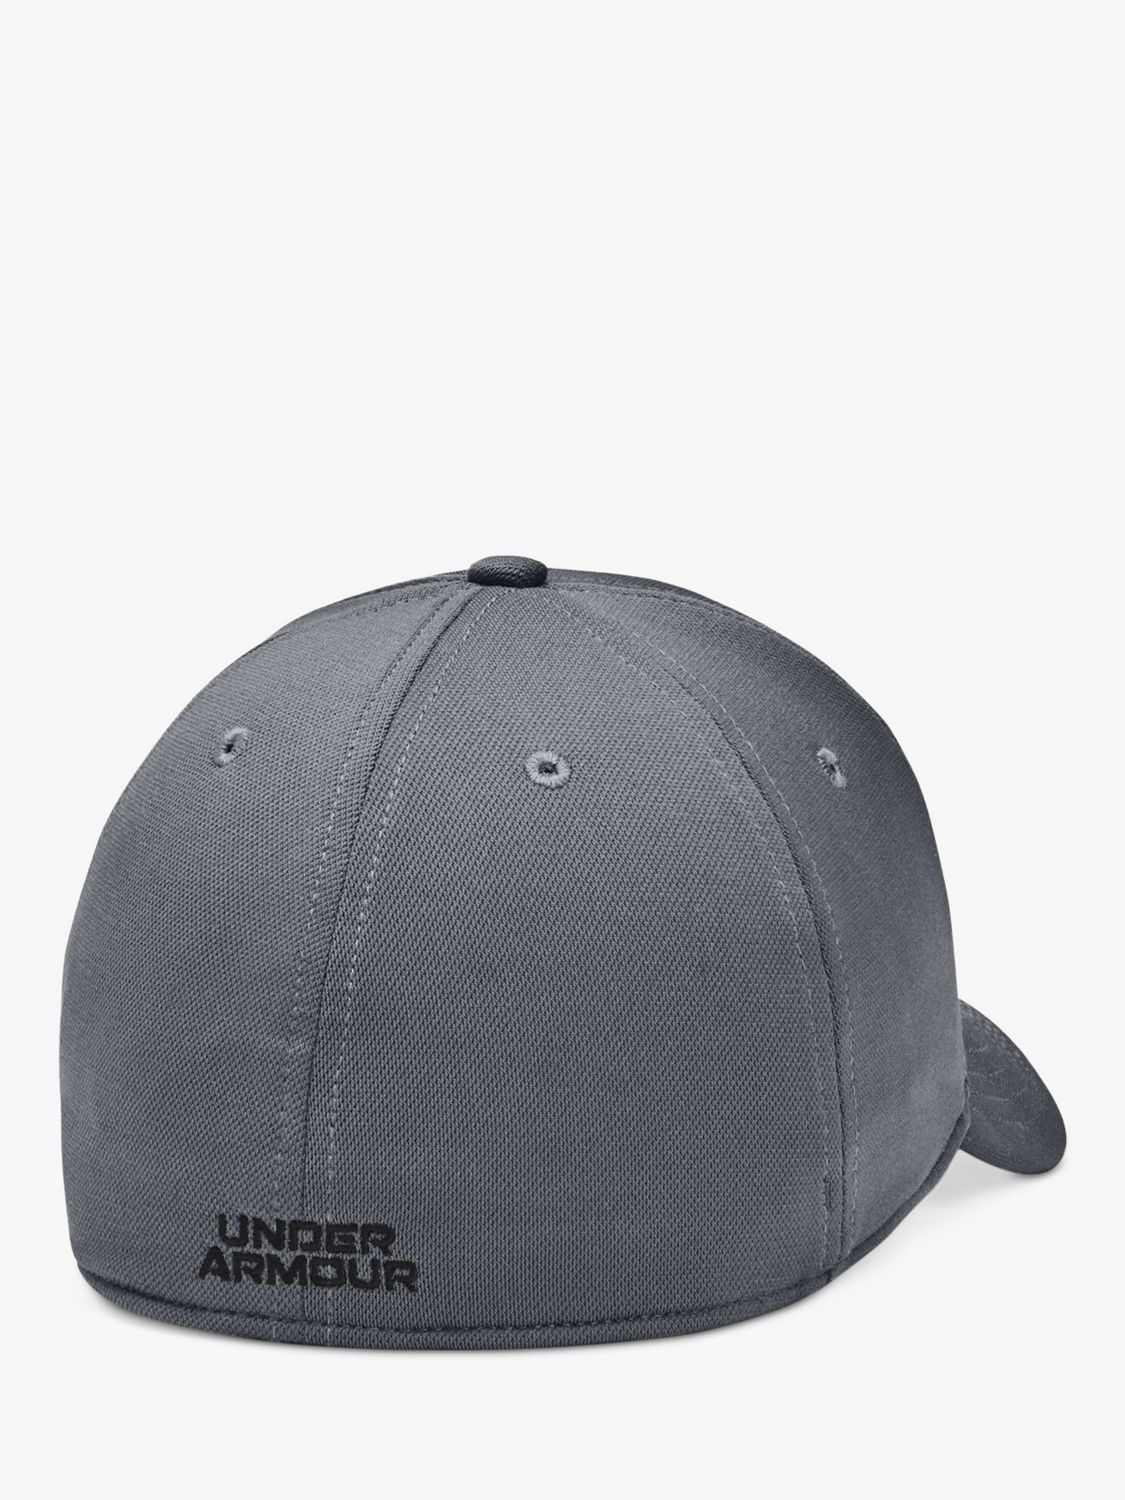 UNDER ARMOUR Cap in dark gray